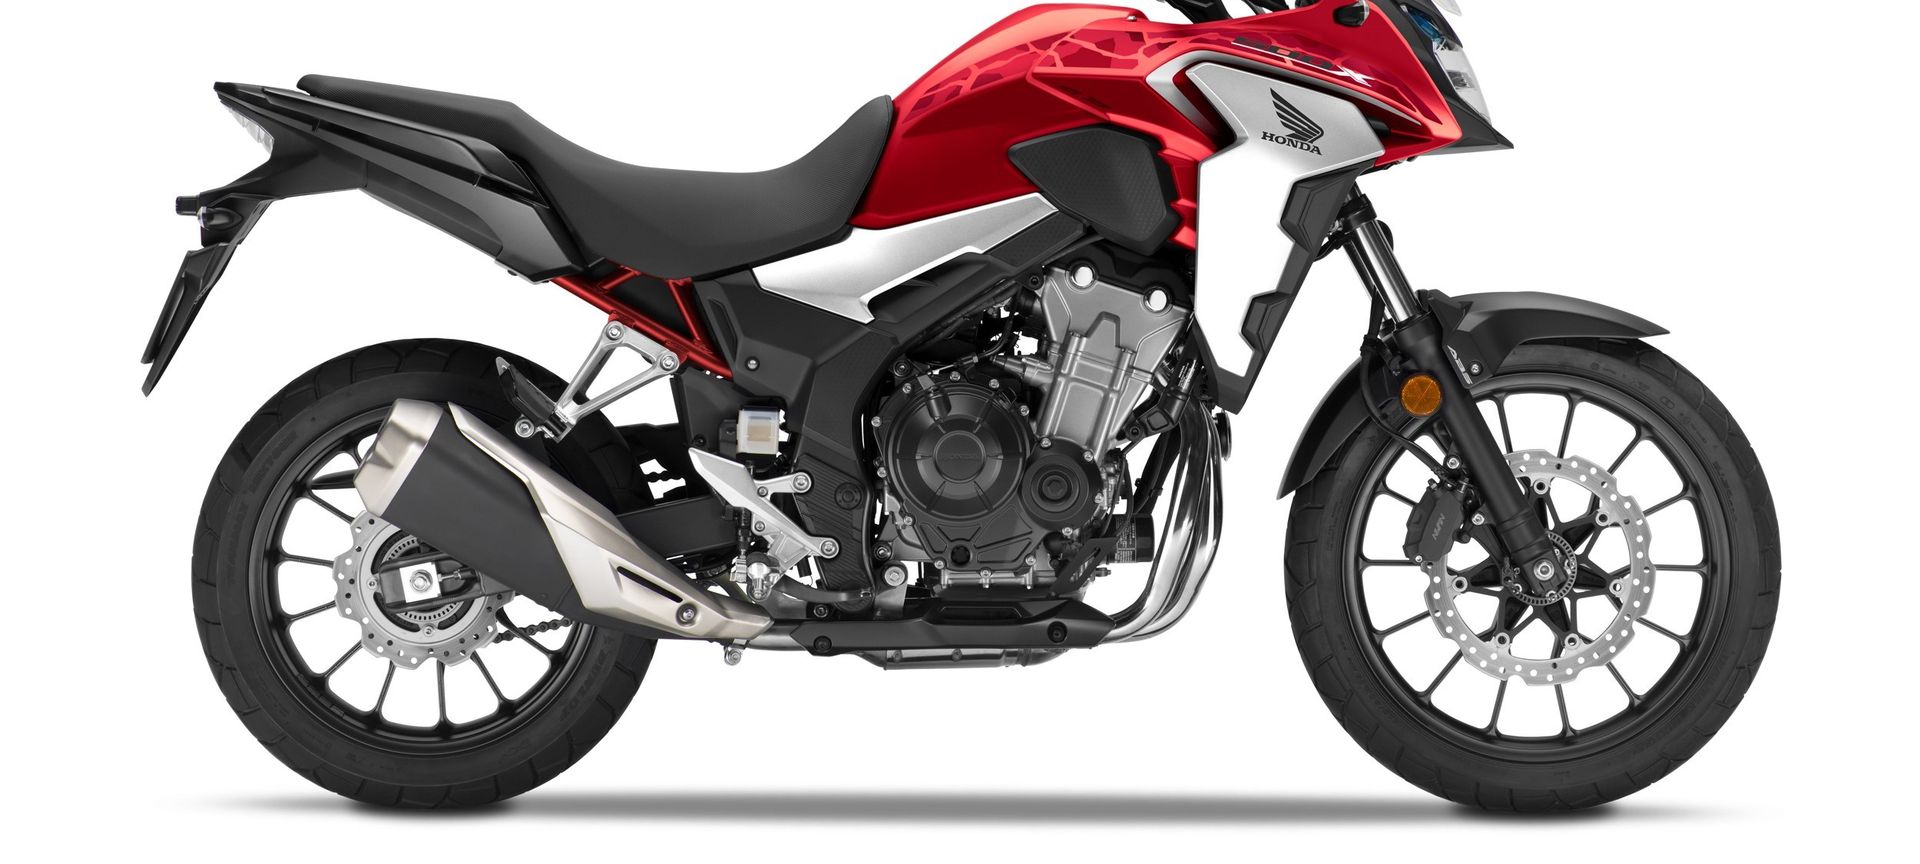 Honda CB500X 2021 kompaktowy motocykl typu adventure w